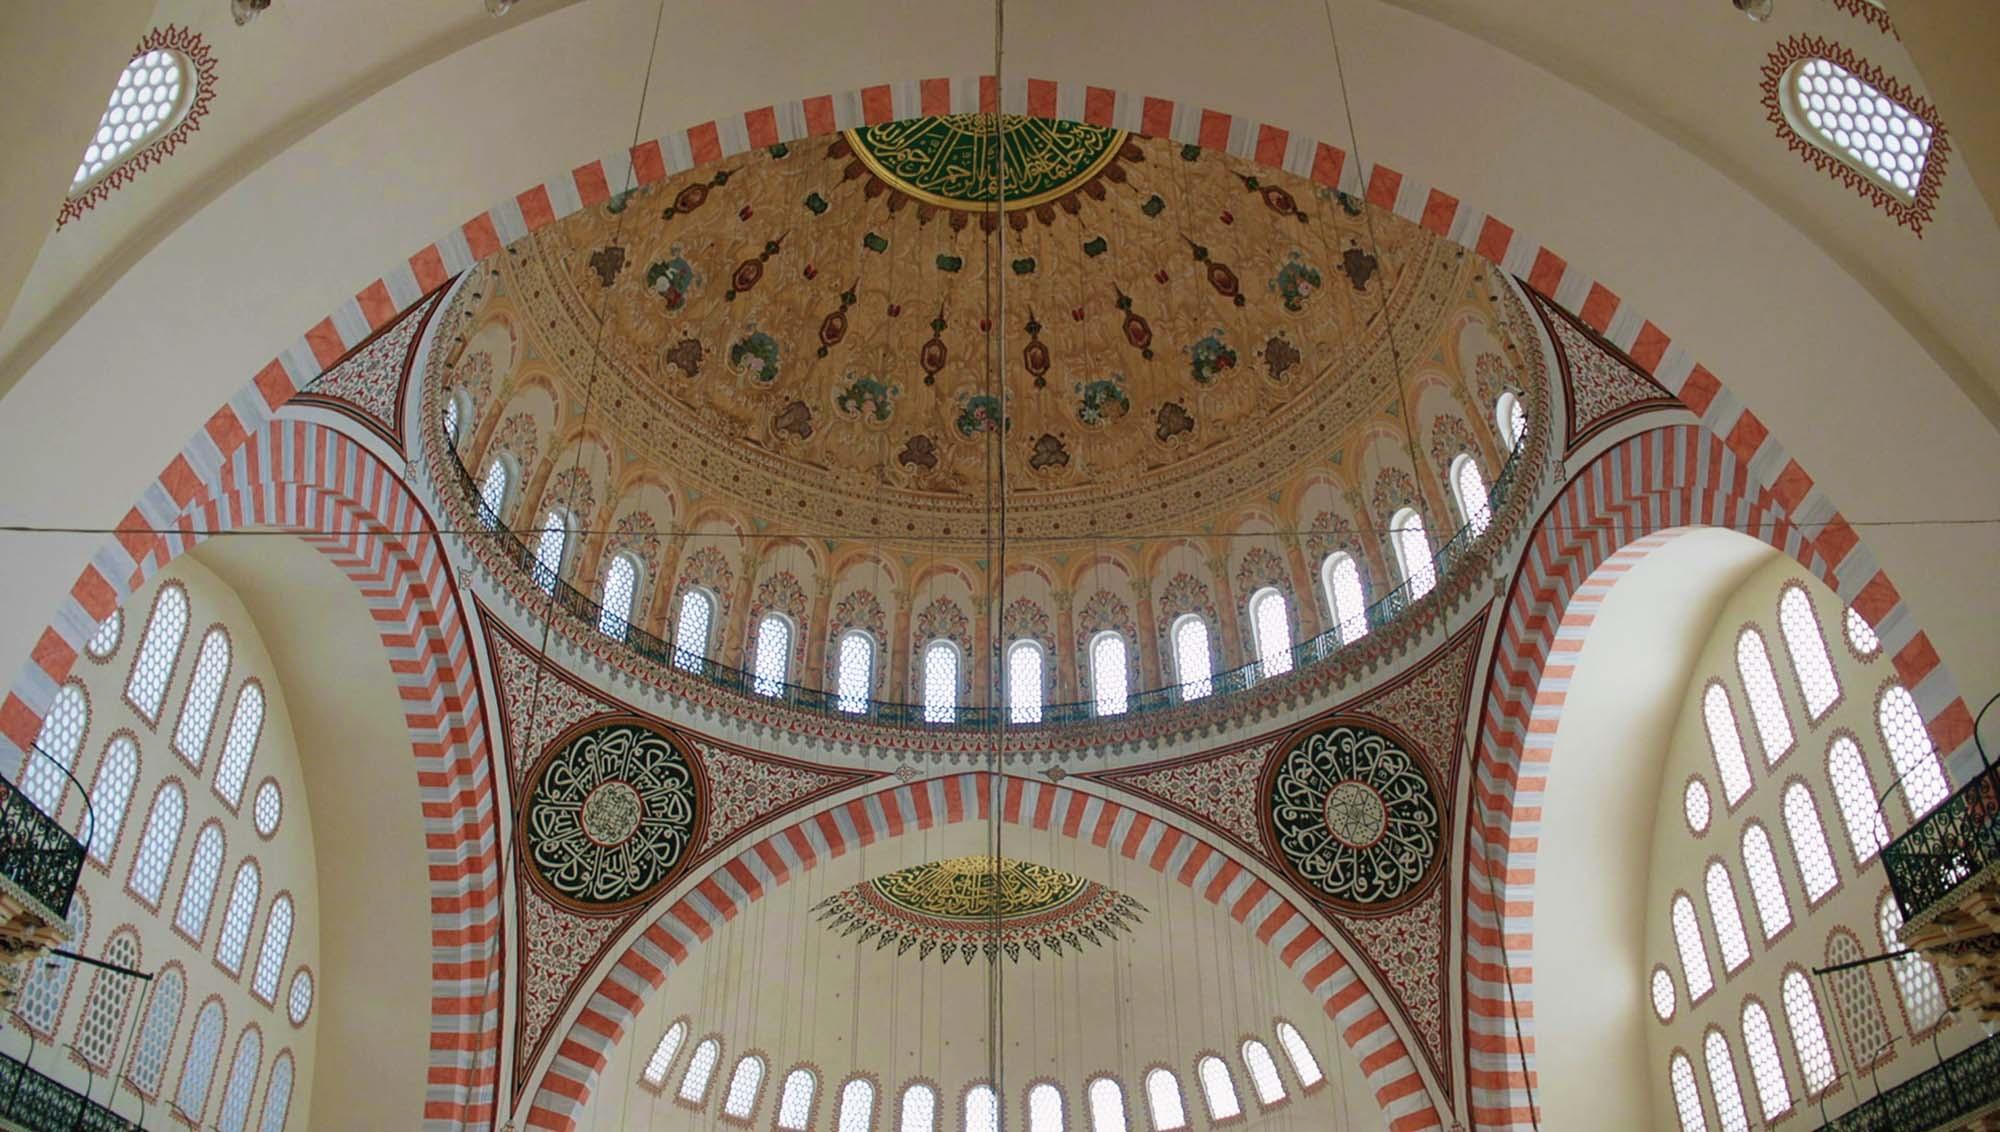 Dome inside the Suleymaniye Mosque